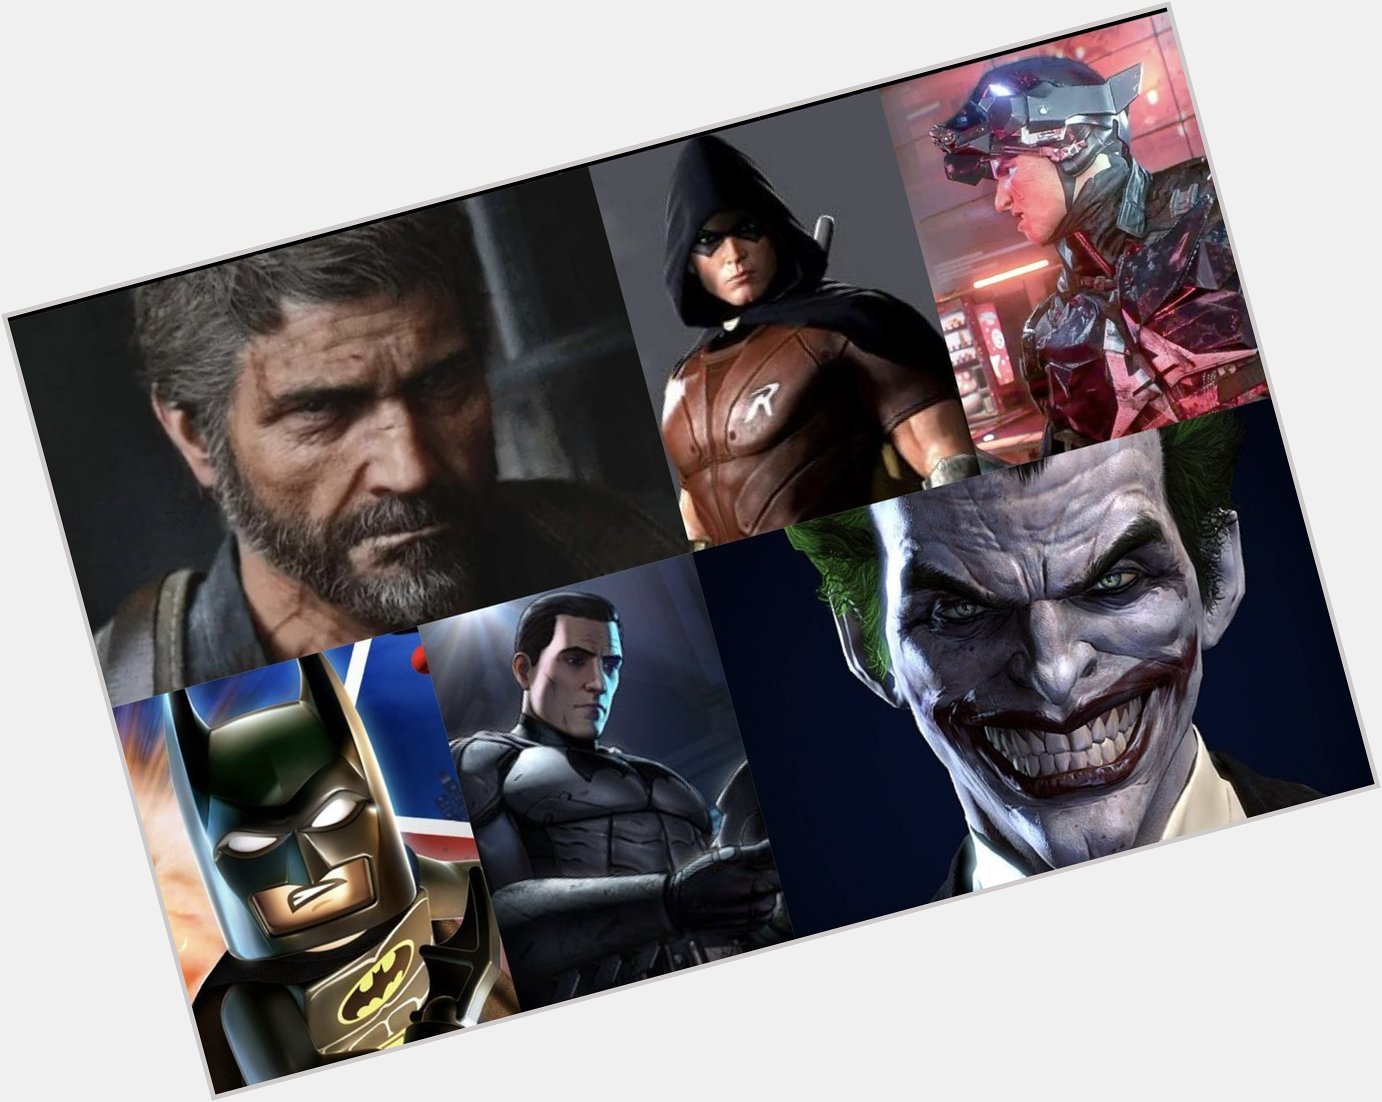 Happy Birthday to Troy Baker, AKA Joel, AKA the only actor who has voiced Batman, Robin AND Joker. 